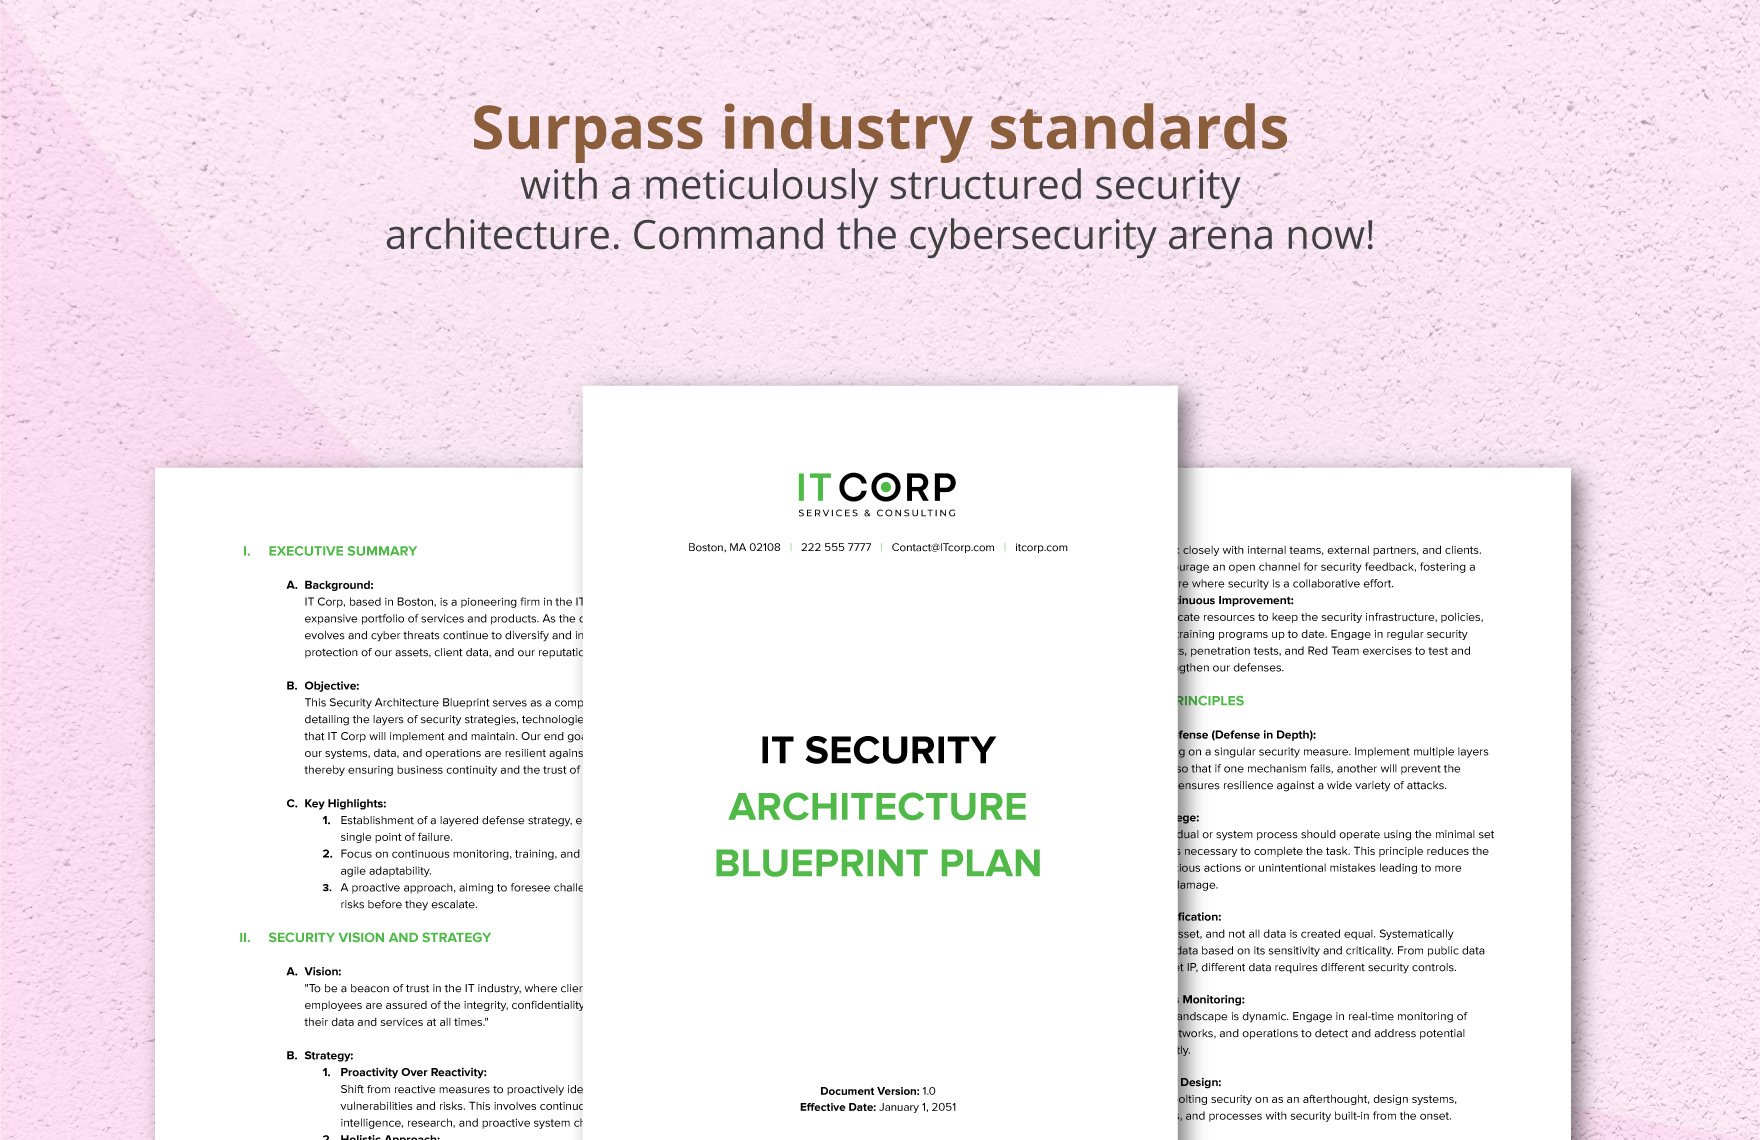 IT Security Architecture Blueprint Plan Template